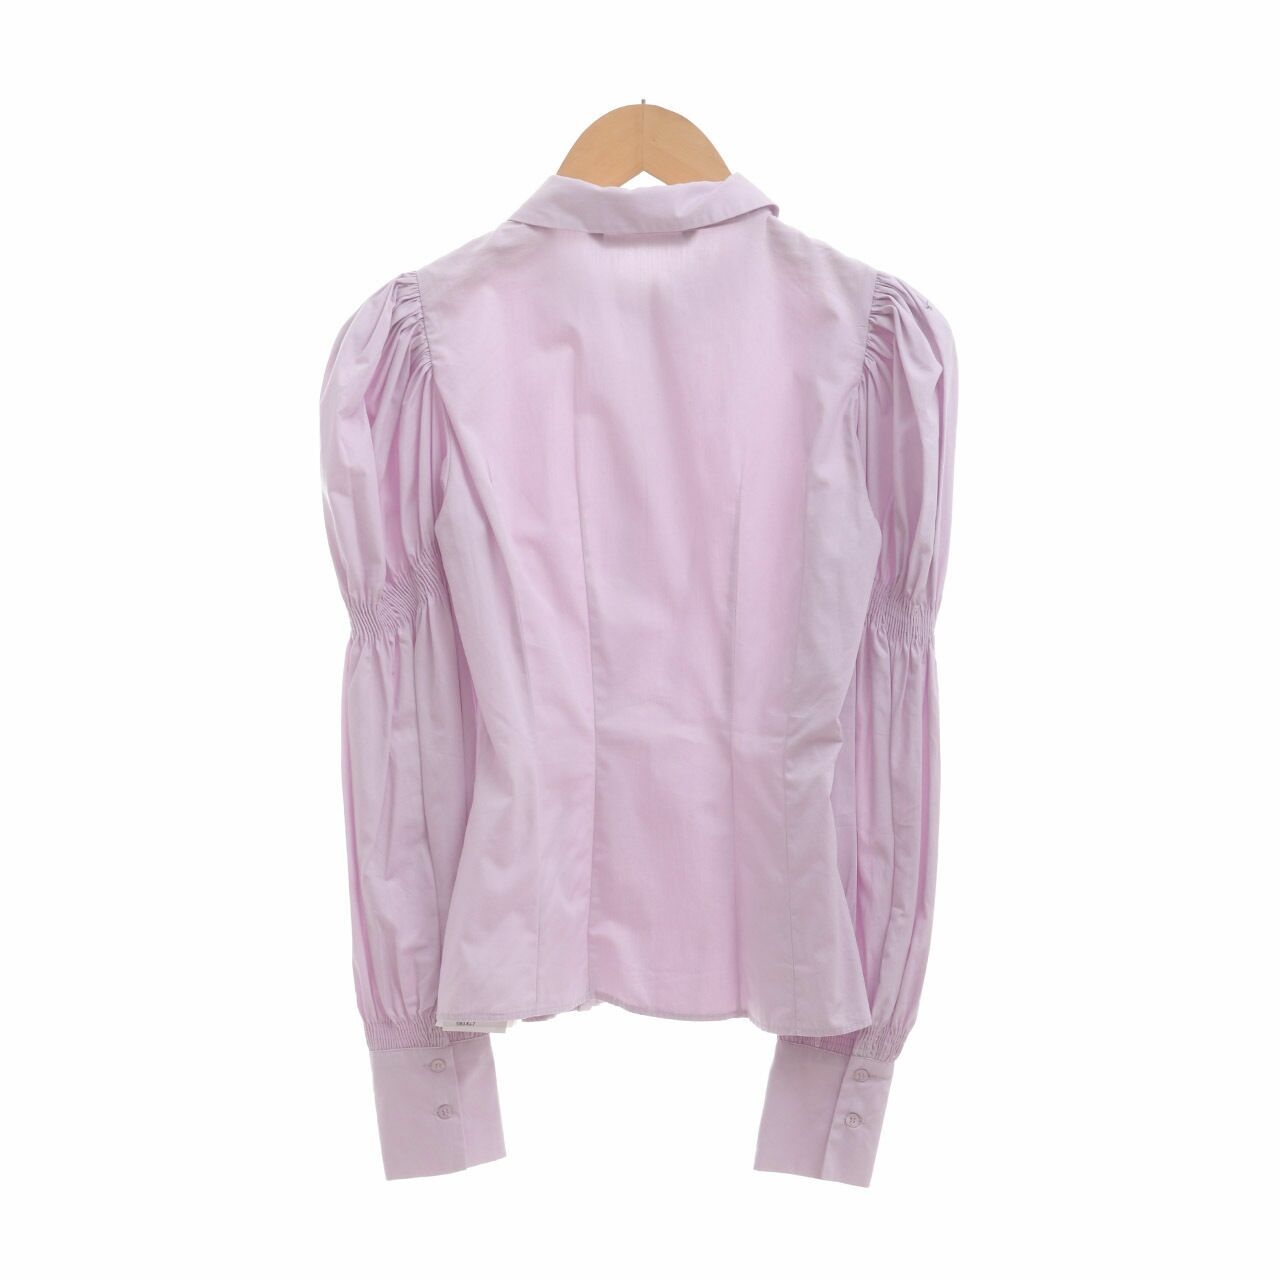 Zara Lilac Shirt